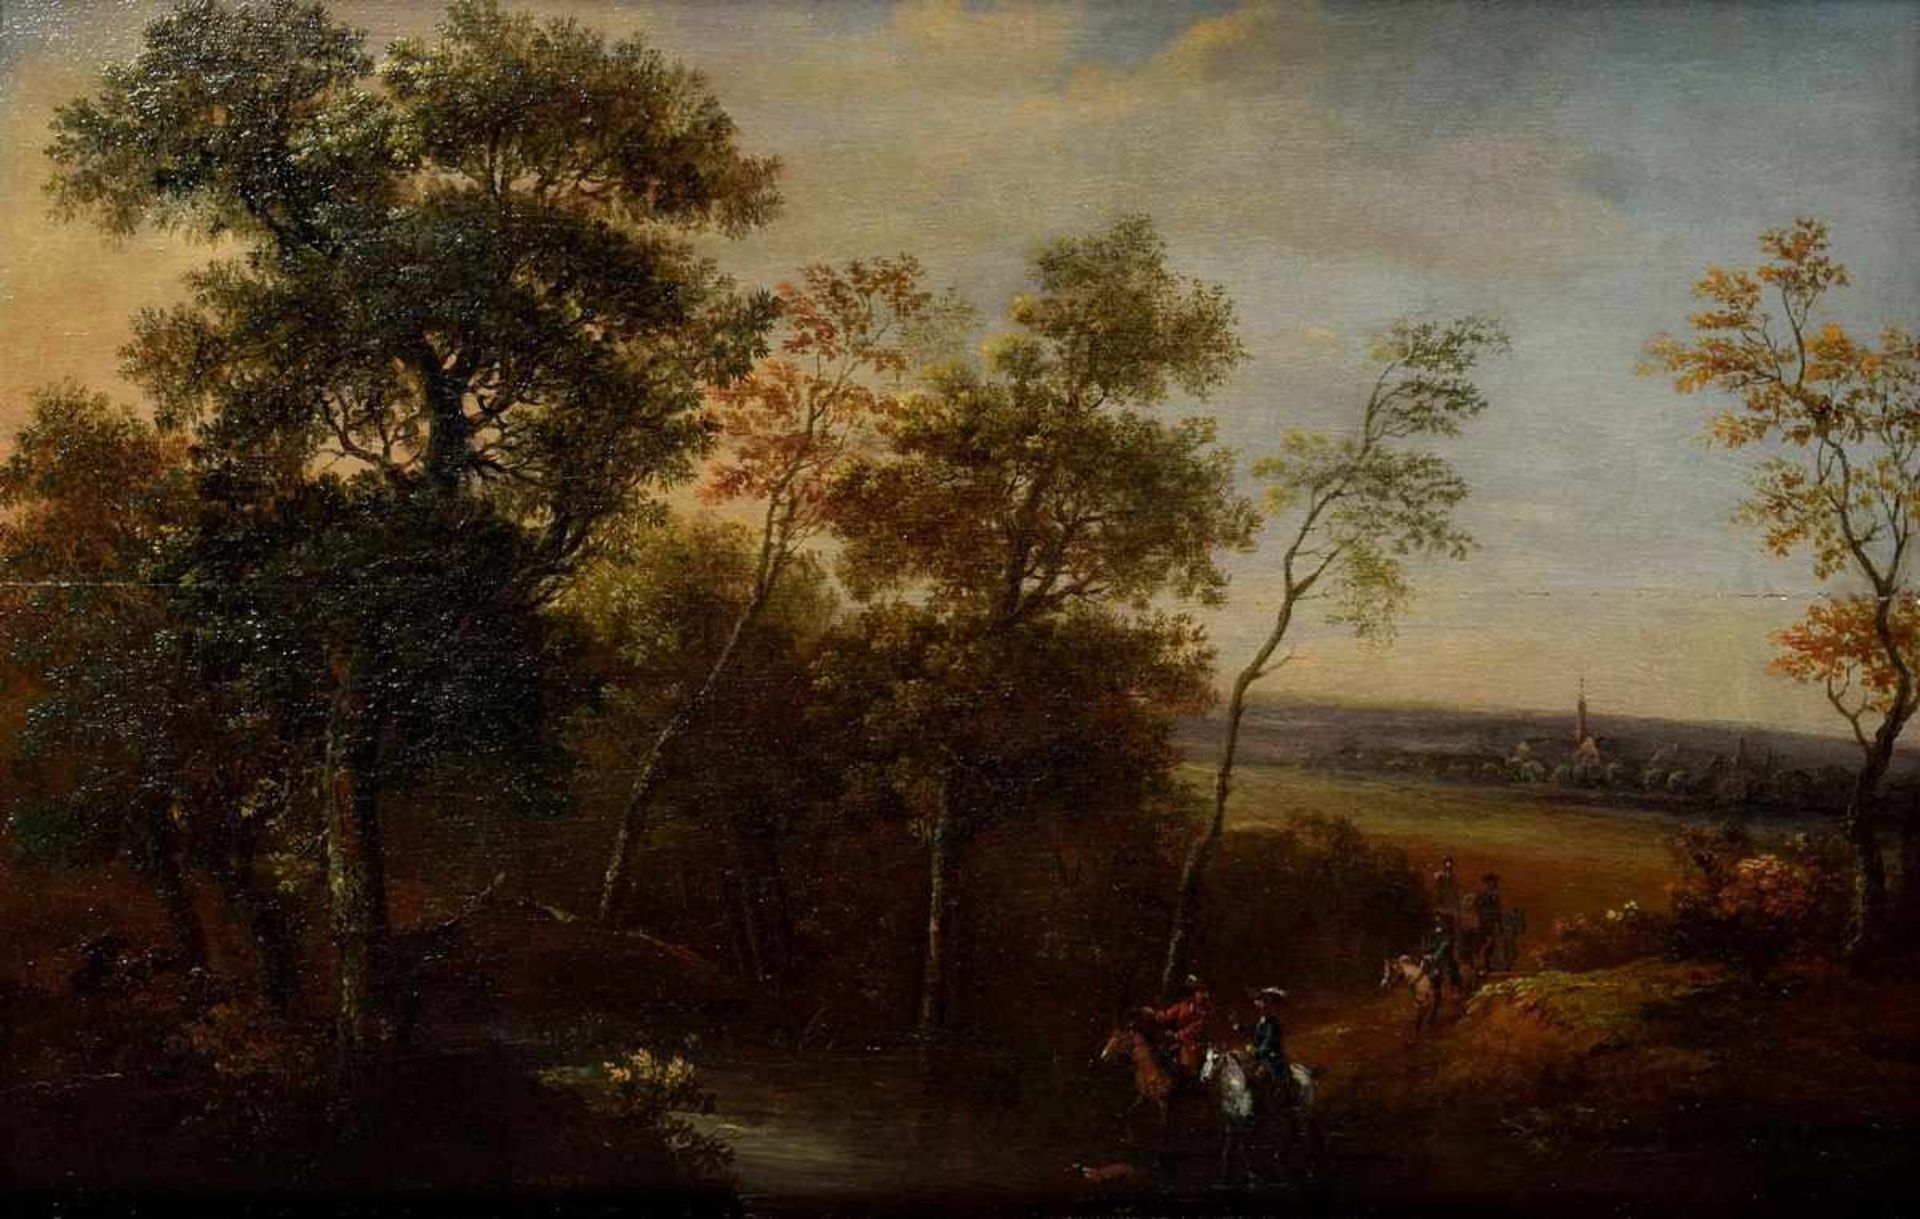 Quatal, Anton (1736-1809) "Landscape with Horsemen", oil/wood, lower left inscr. "Quatal", verso old